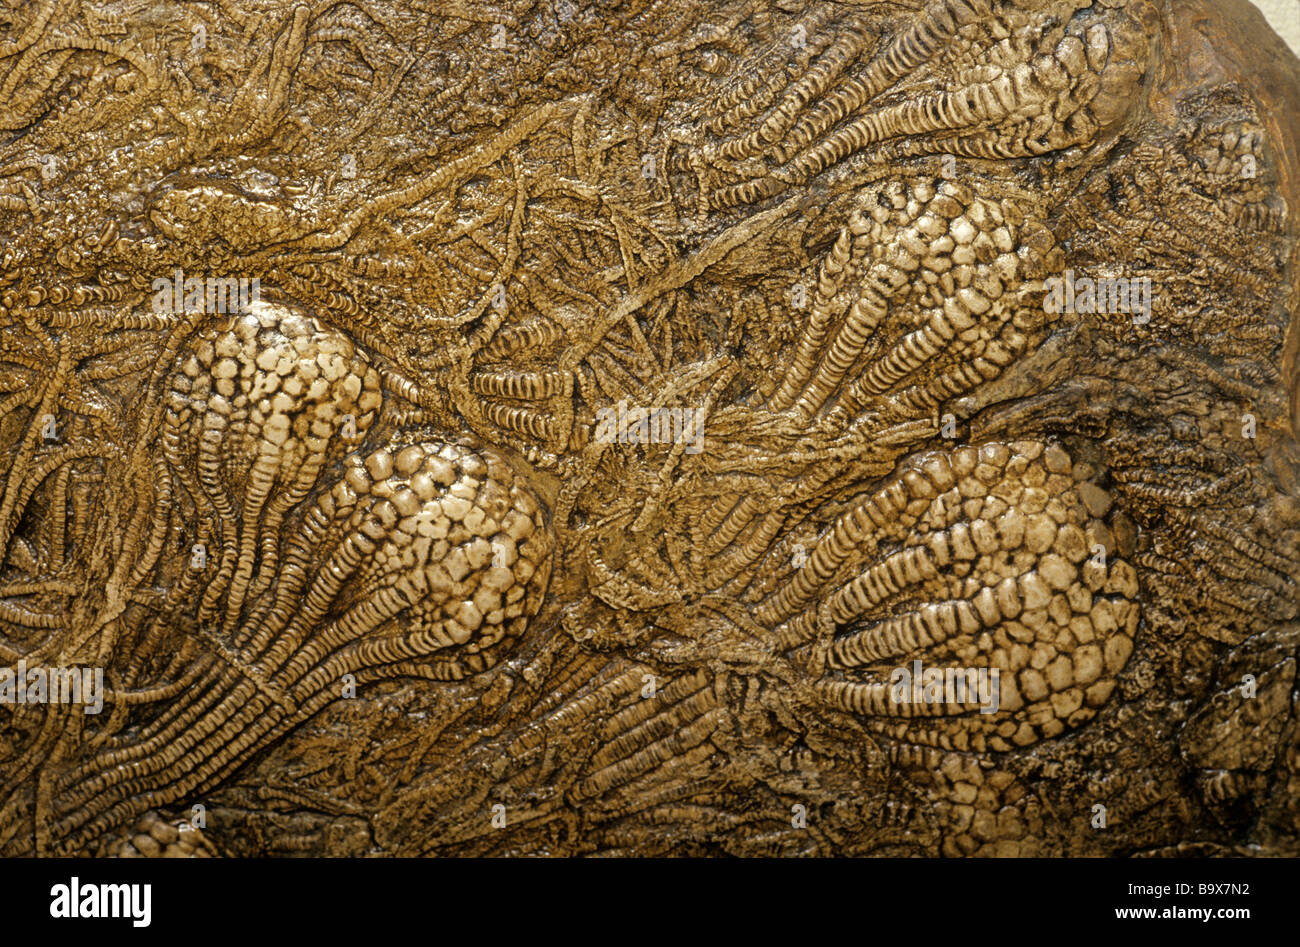 Crinoidi fossili del tardo Cretaceo formazione Niobrara Kansas Foto Stock